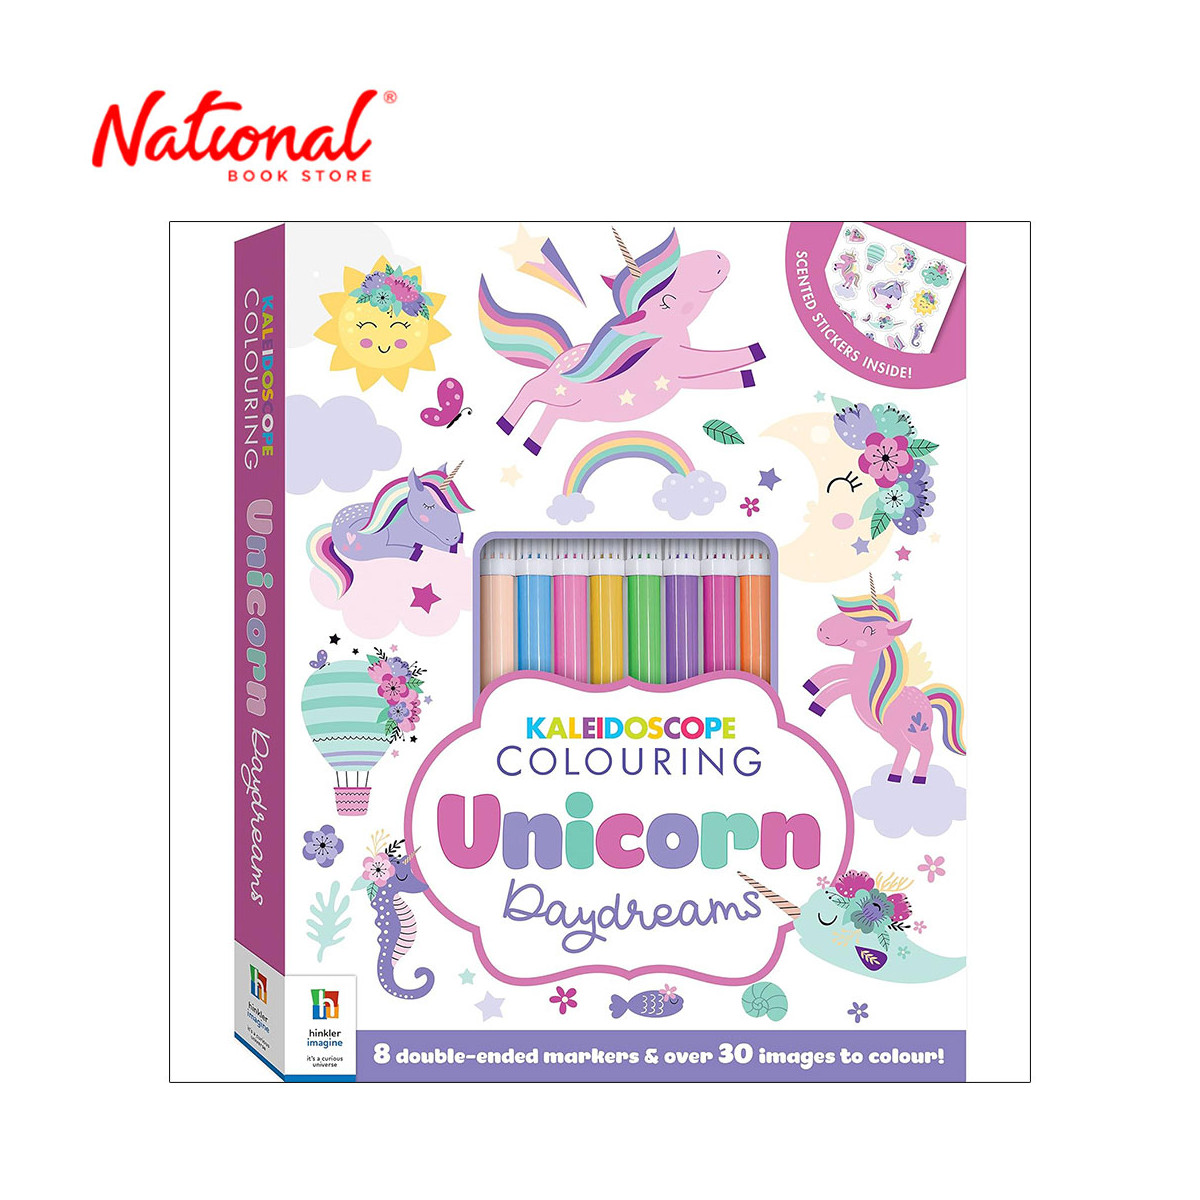 Kaleidoscope Colouring Kit: Unicorn Daydreams - Trade Paperback - Activity Books for Kids